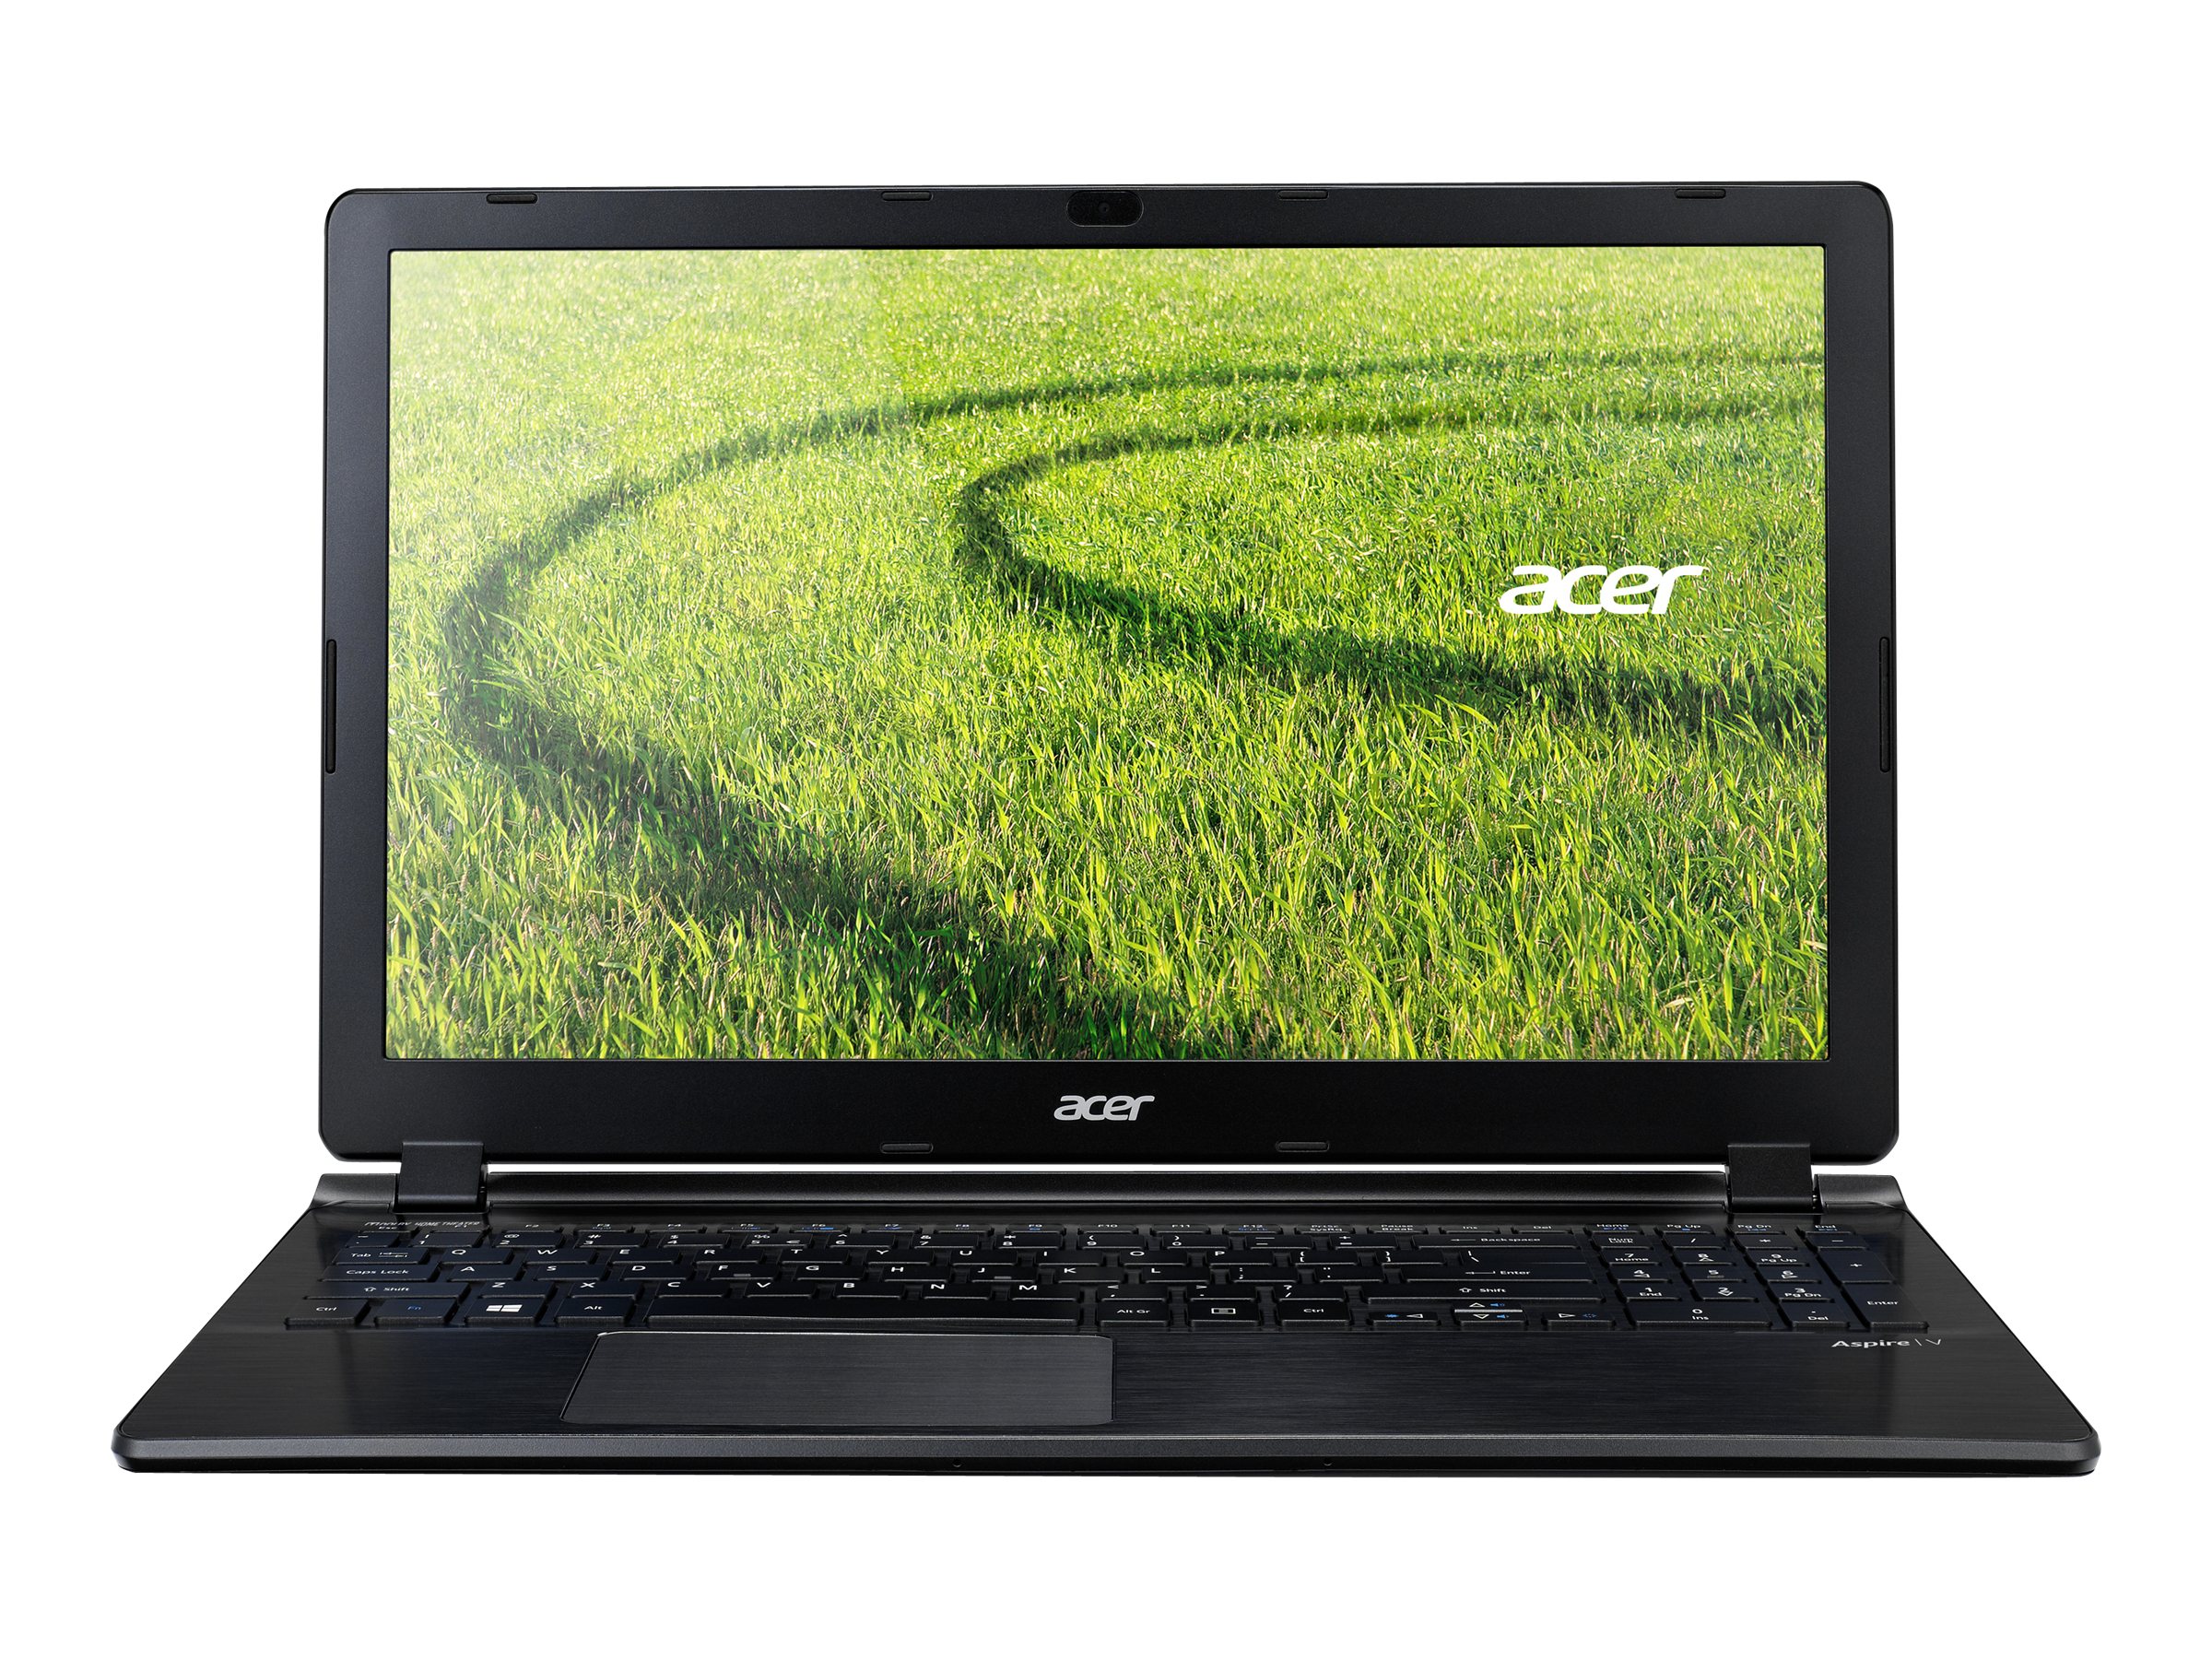 Acer Aspire V7 (581)